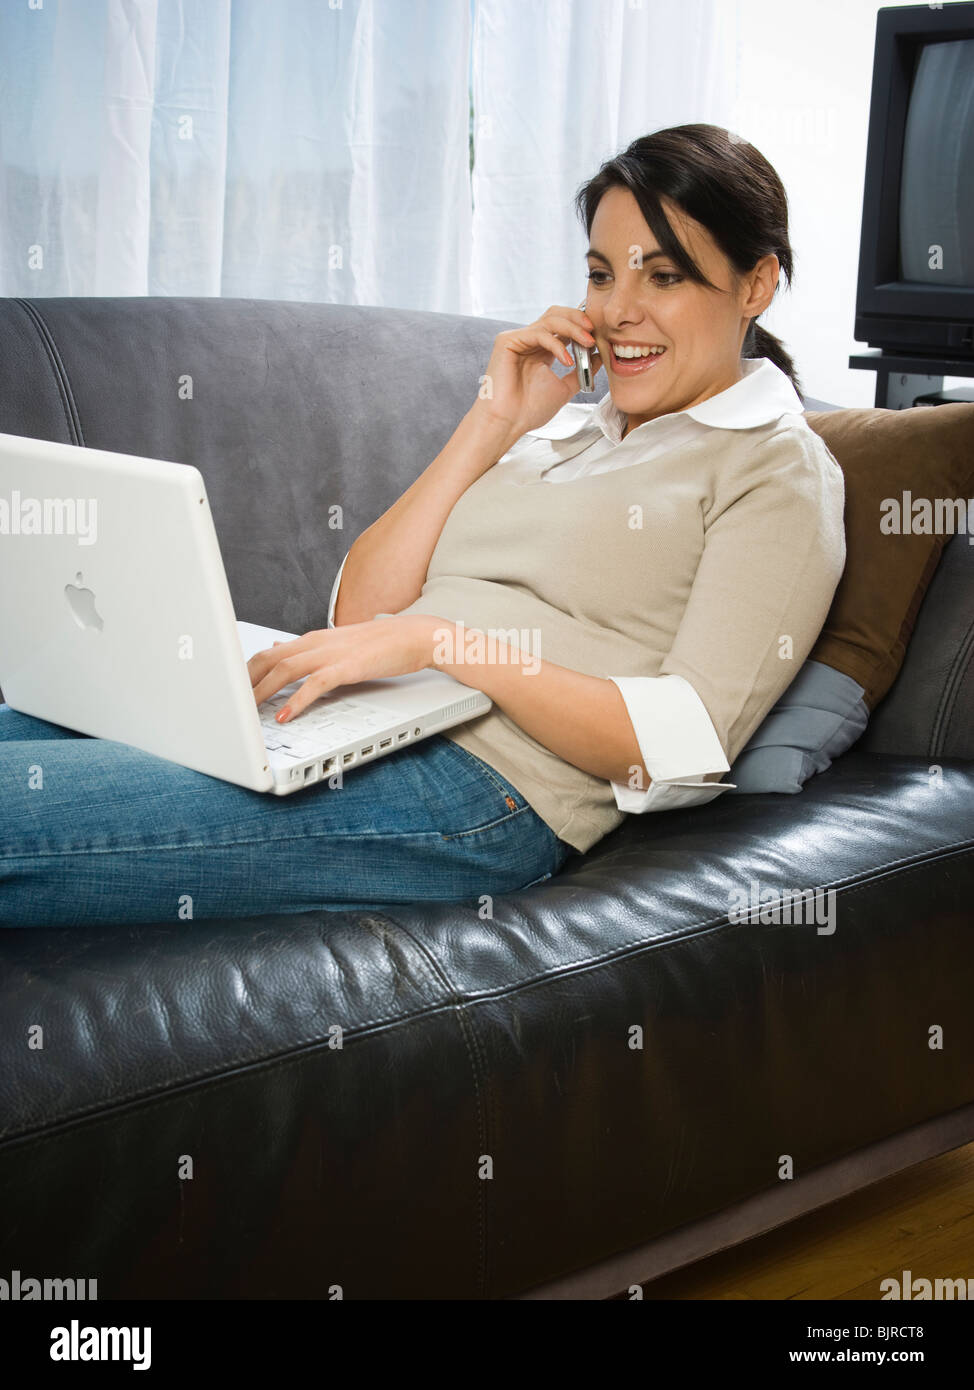 USA, Utah, Orem, woman lying on sofa using laptop and cell phone Stock Photo